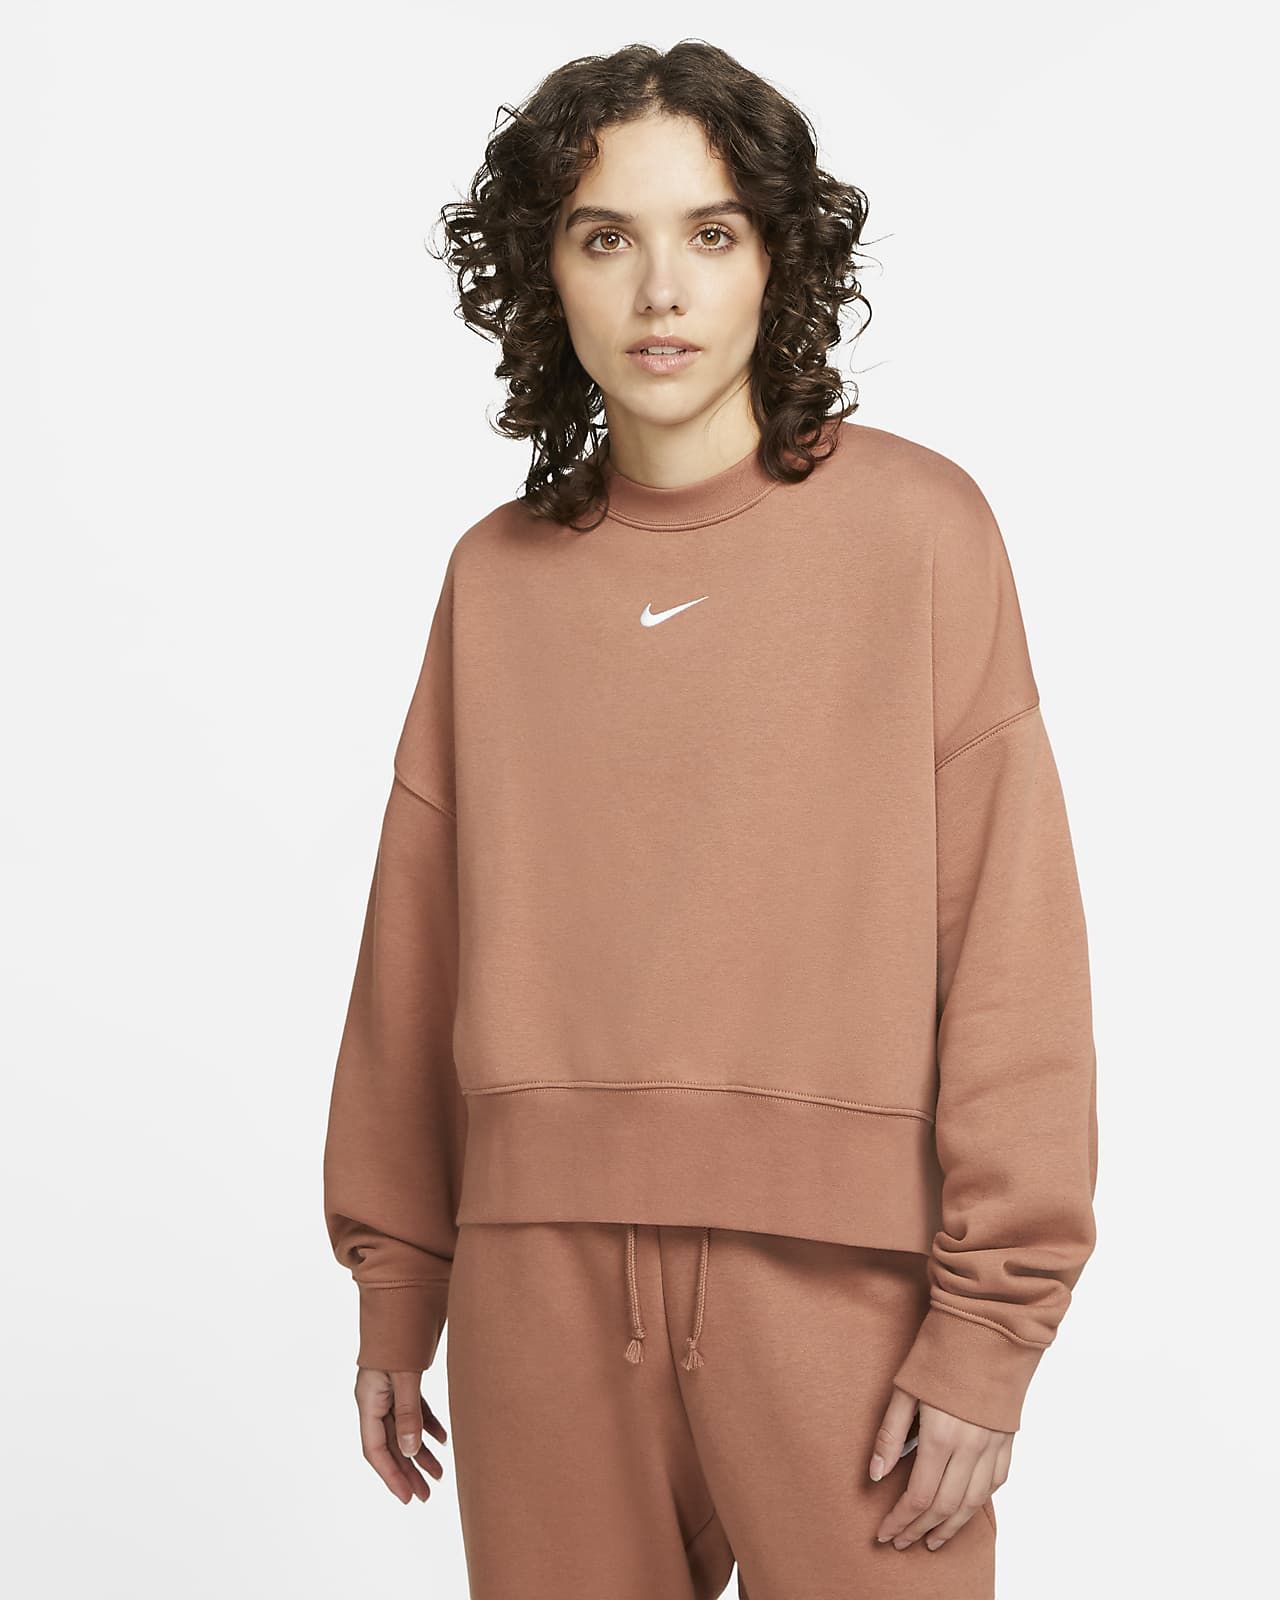 Nike Sportswear Collection Essentials Women's Oversized Fleece Crew Sweatshirt. Nike.com | Nike (US)